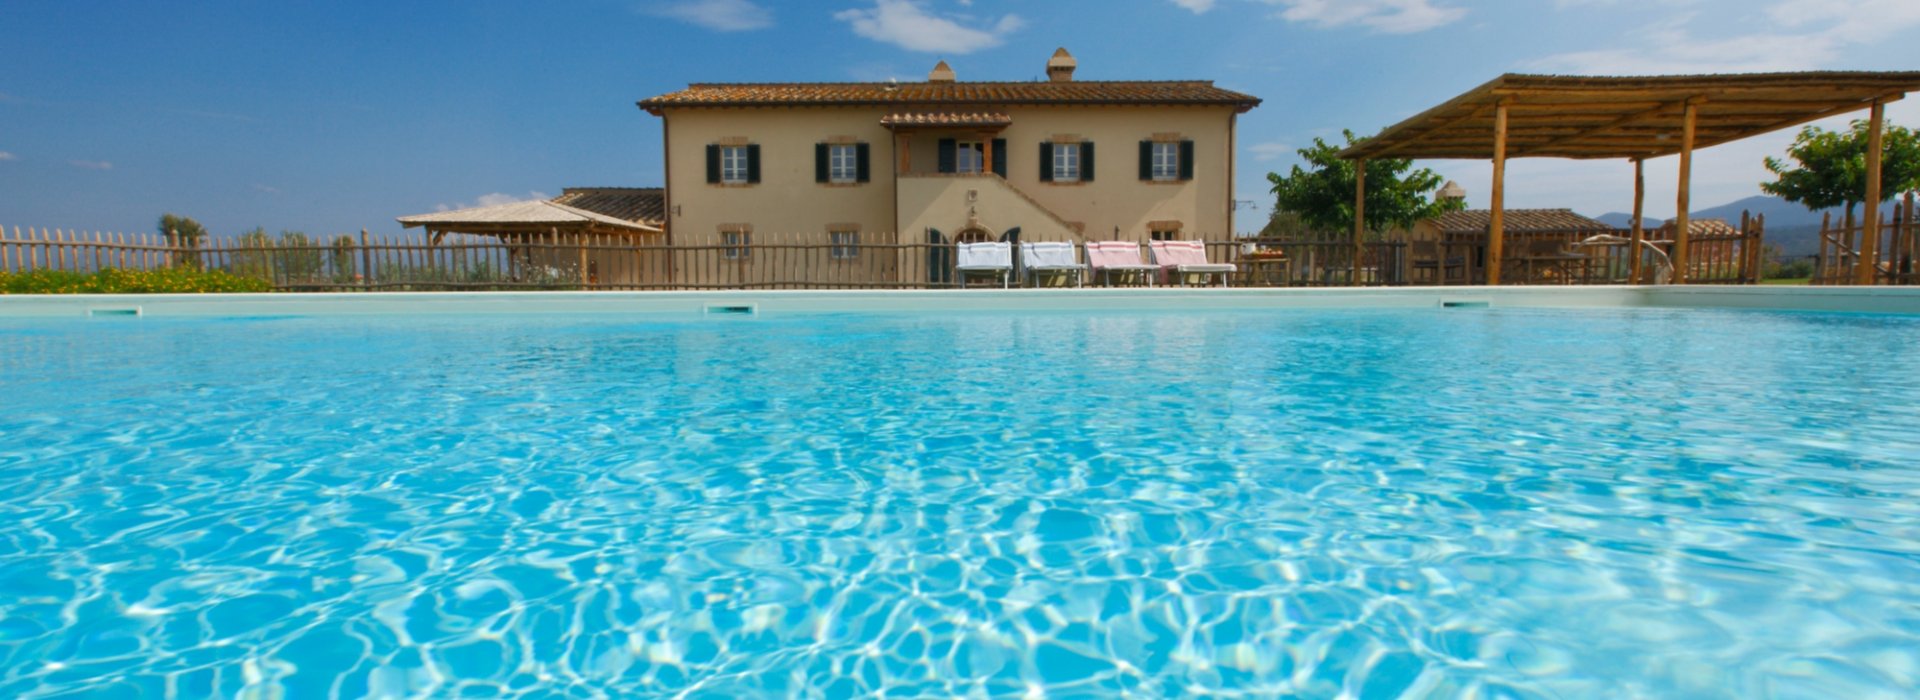 Agriturismo di lusso con piscina in Toscana